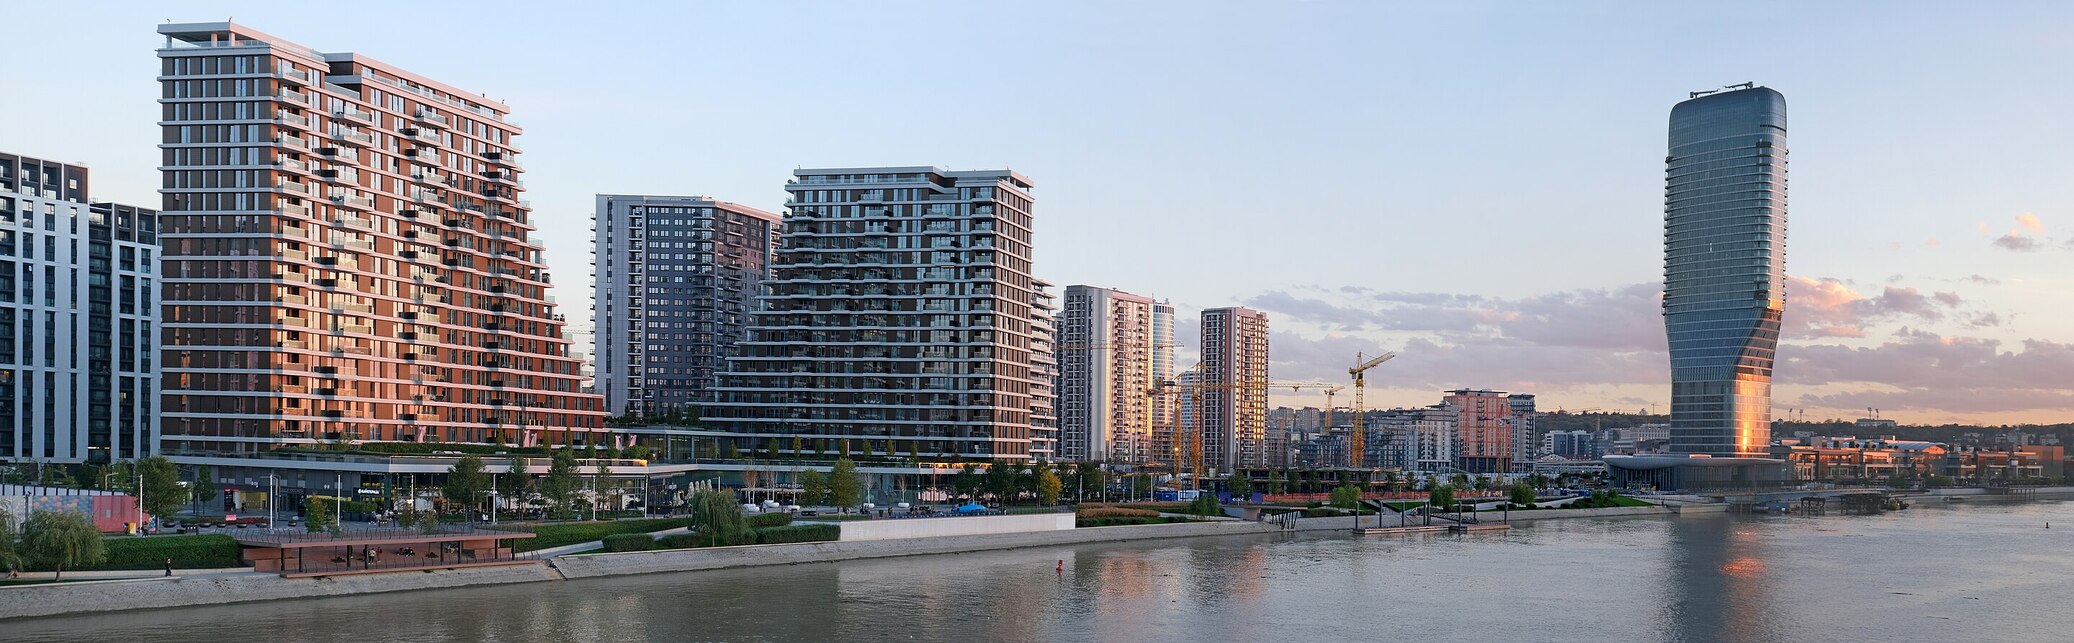 Belgrade Waterfront. Forrás: Wikimedia Commons / Kallerna
